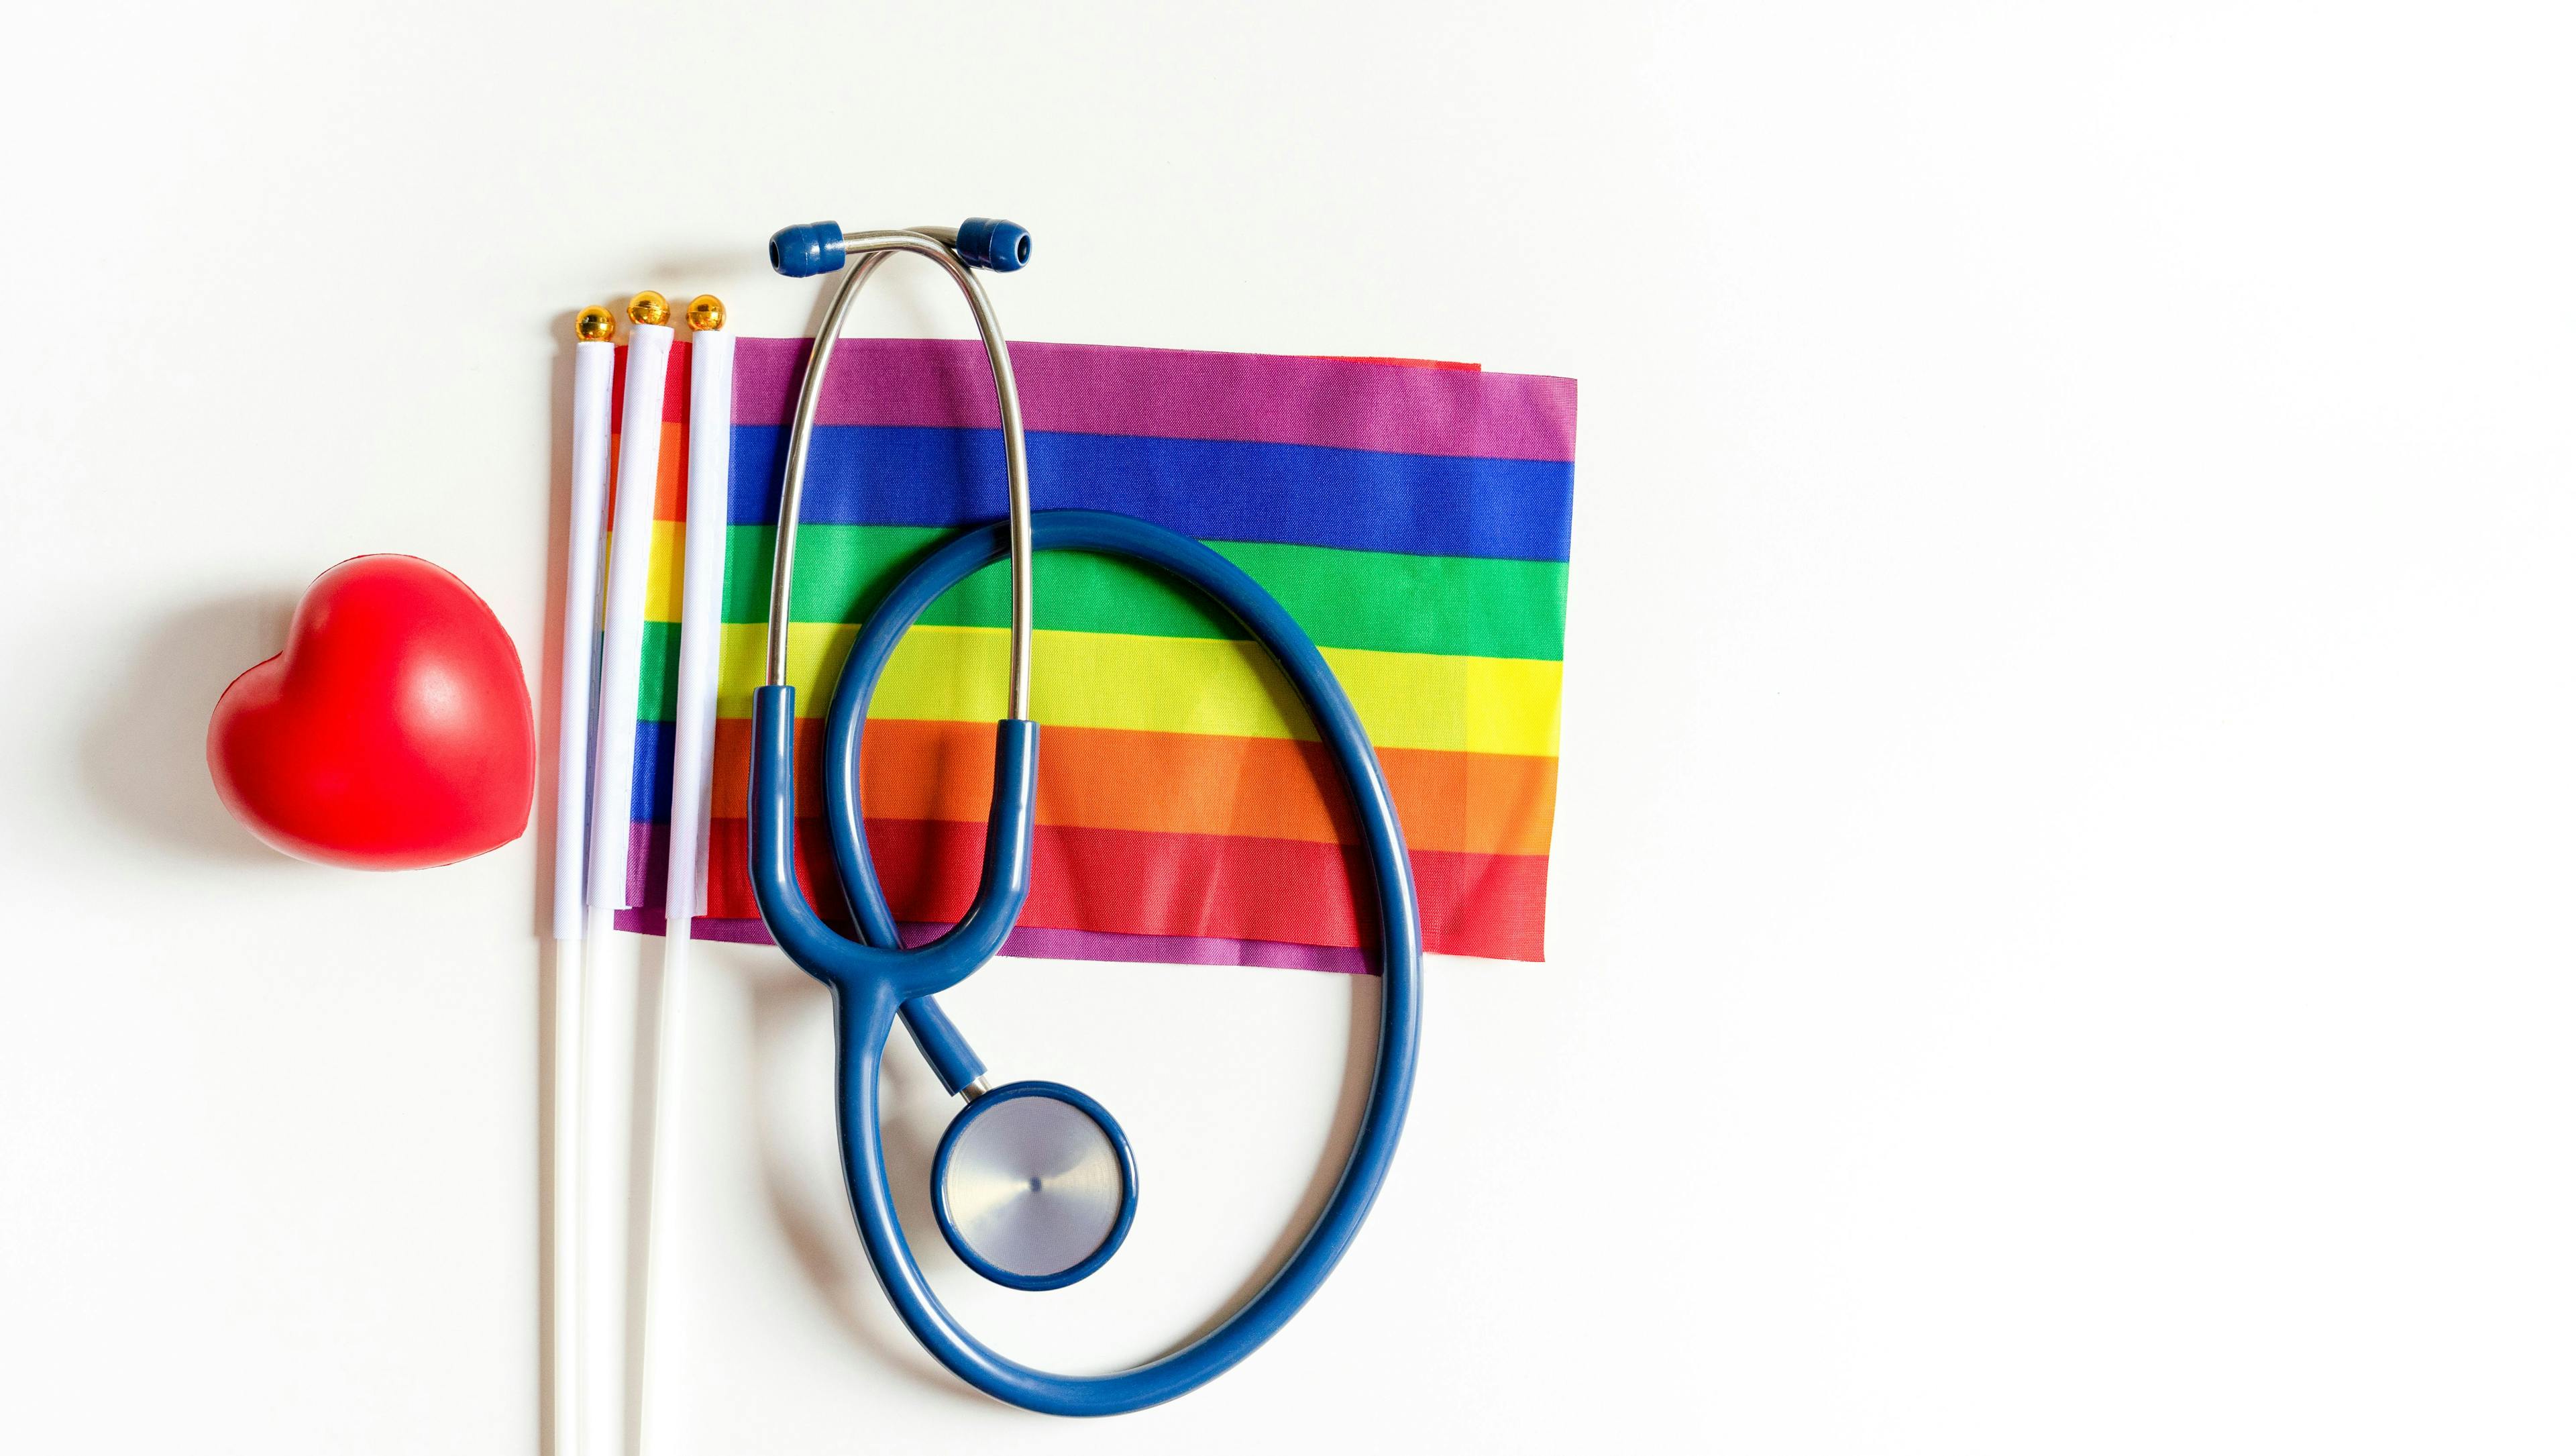 Stethoscope and Pride Flag | Verin - stock.adobe.com